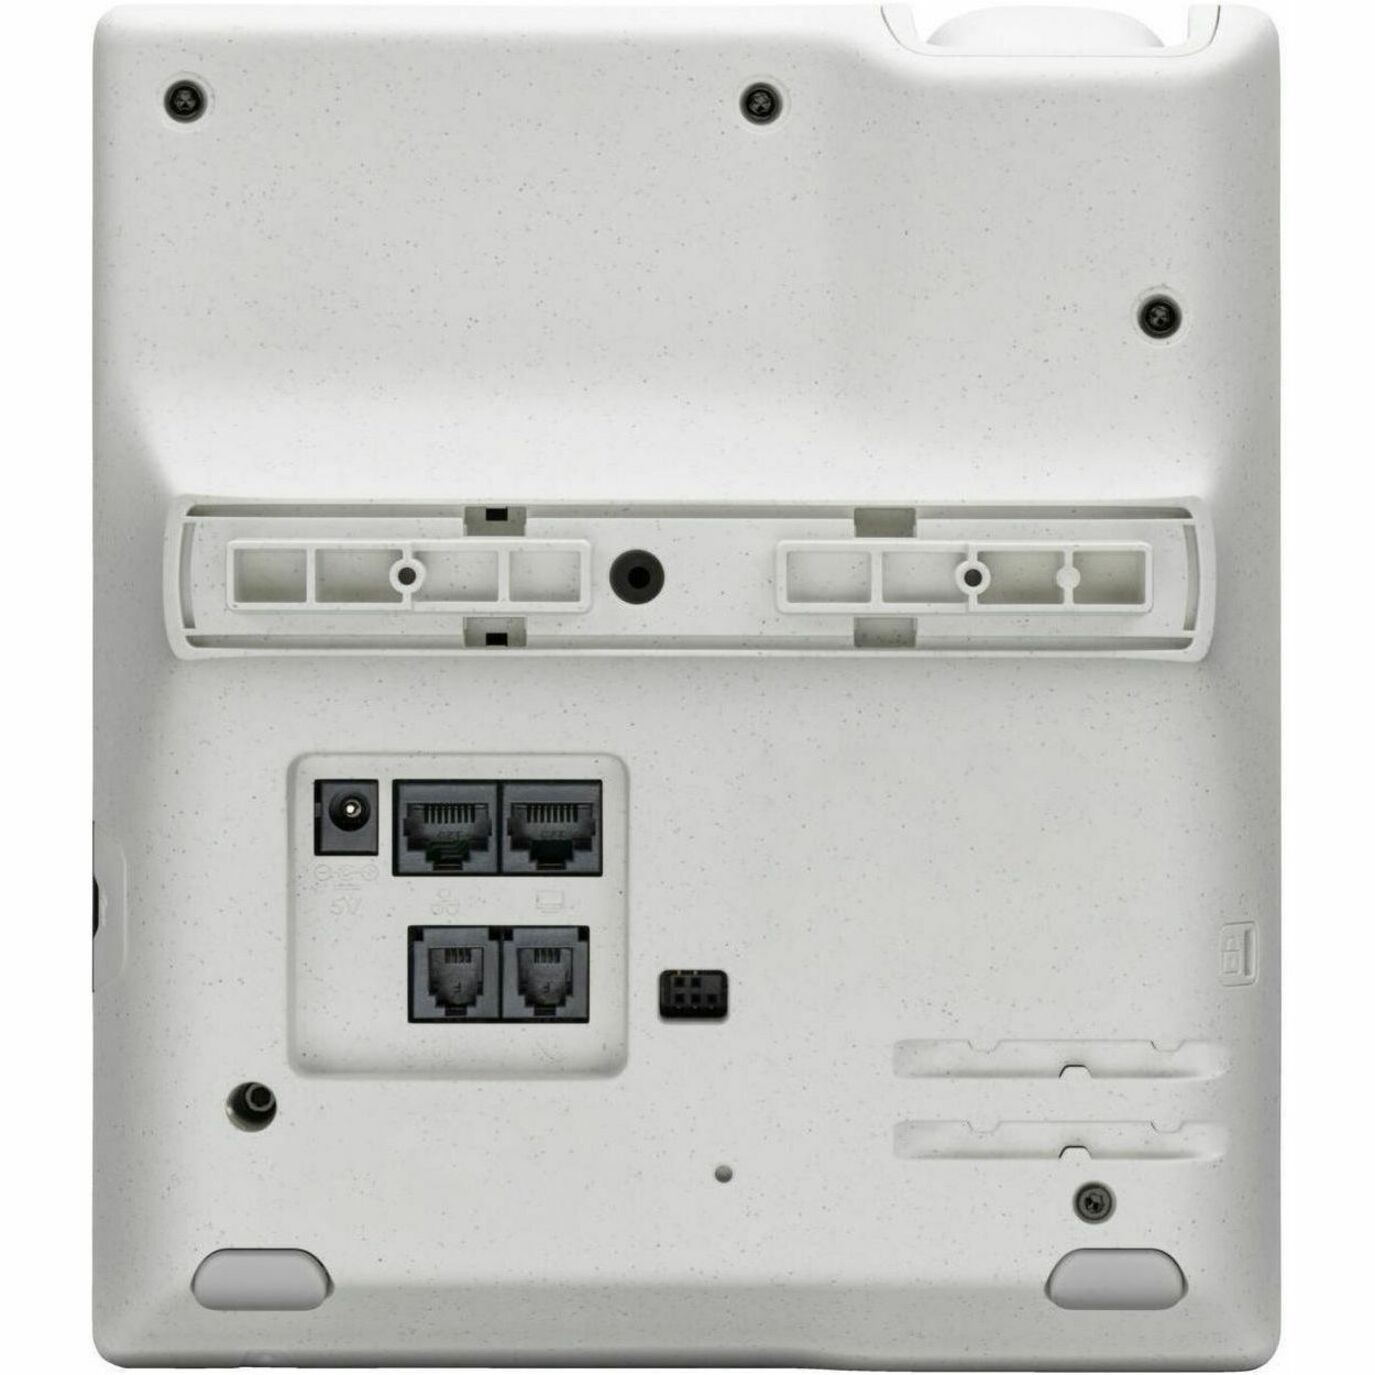 Poly 82M94AA Edge E500 IP Phone - Corded Desktop, Black - TAA Compliant